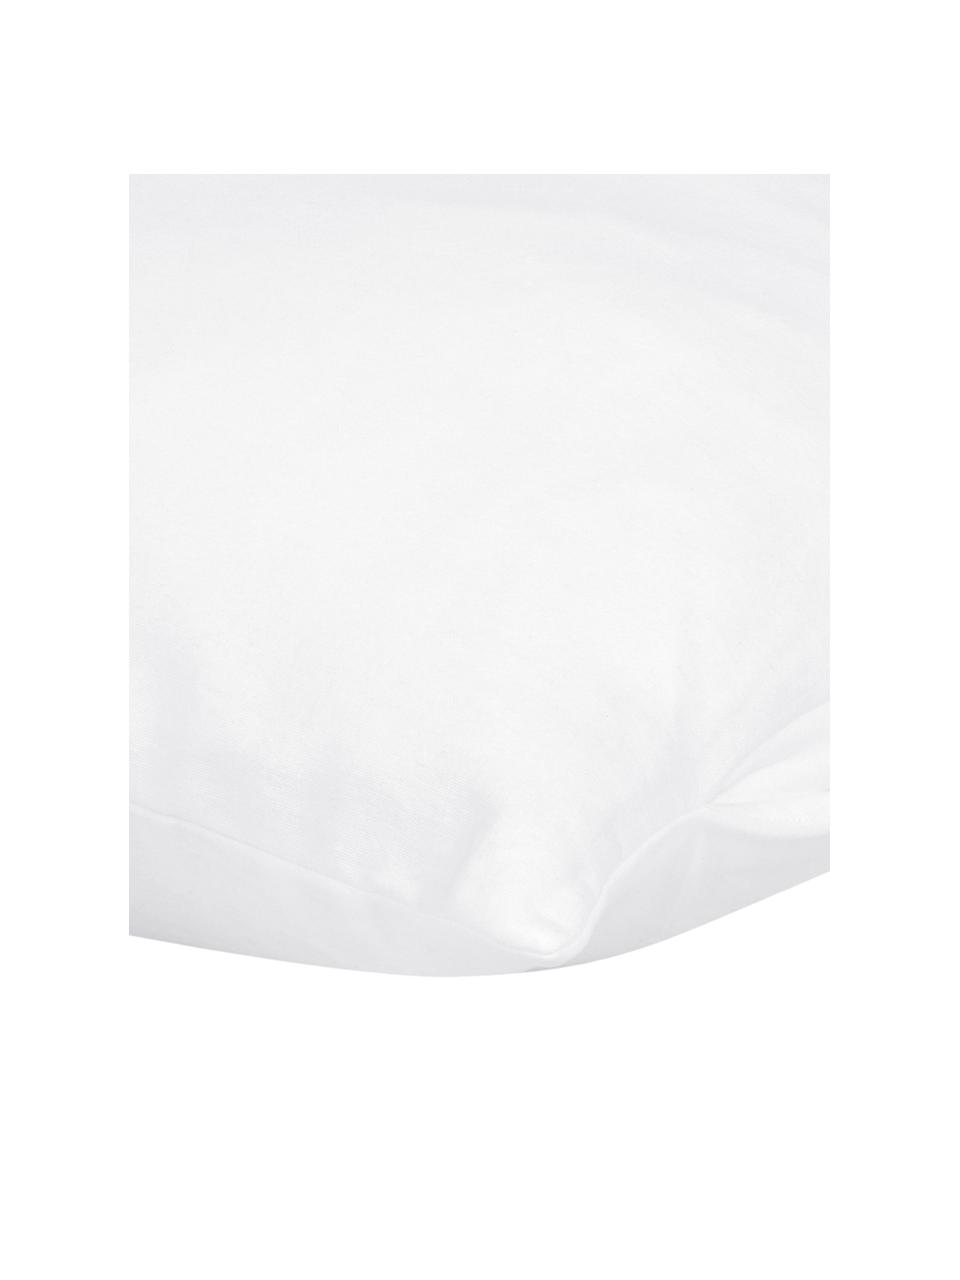 Flanell-Kissenbezüge Biba in Weiss, 2 Stück, Webart: Flanell Flanell ist ein k, Weiss, B 40 x L 80 cm